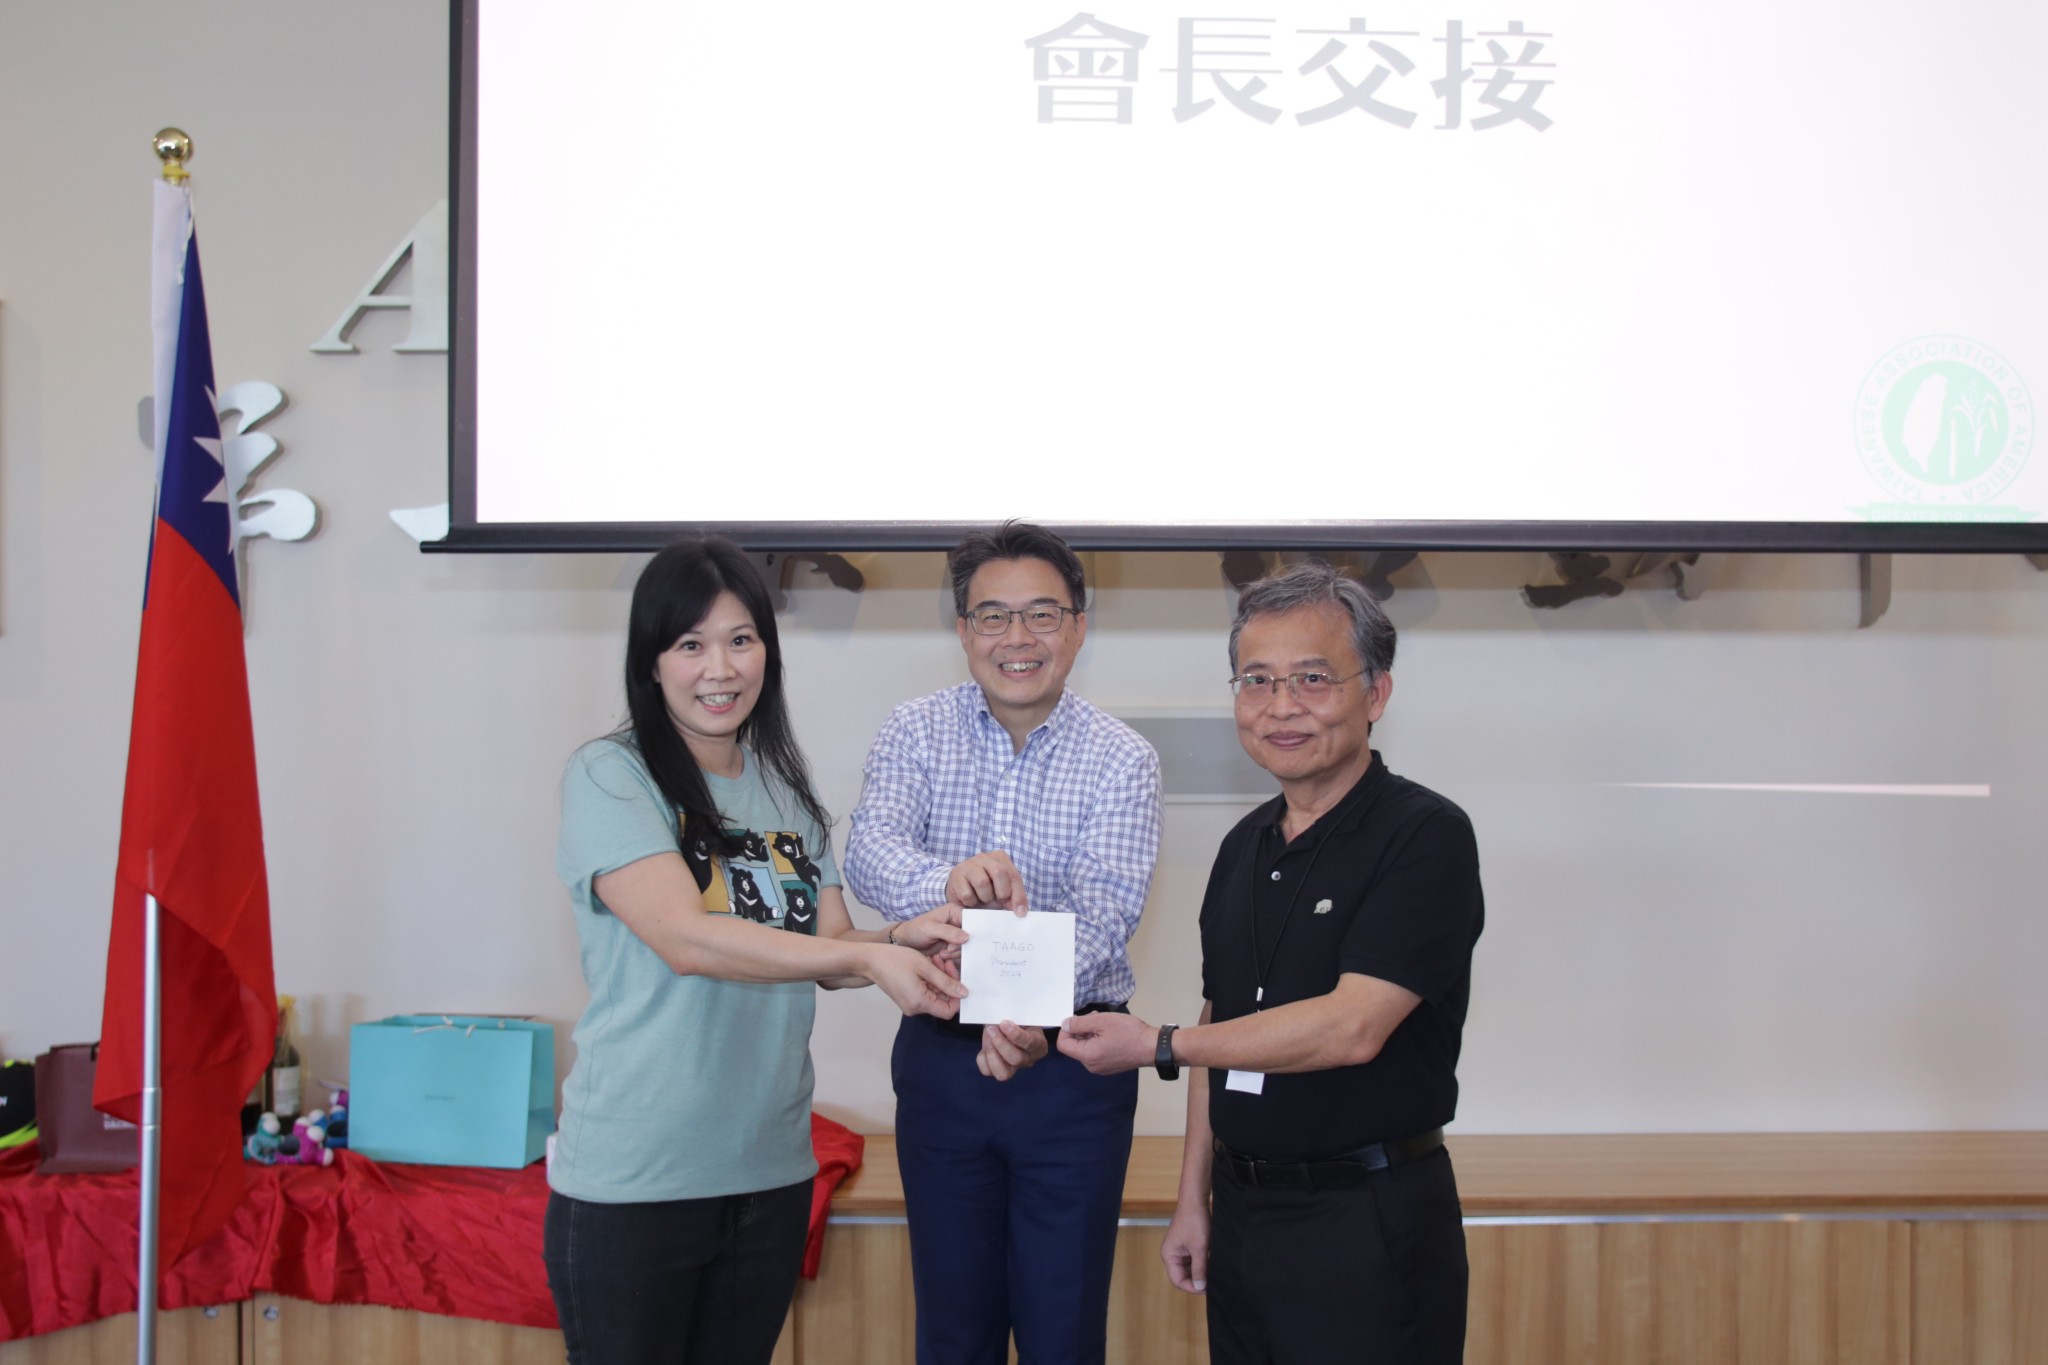 Taiwanese Association of America Greater Orlando Celebrates Lantern Festival with Tangyuan Making